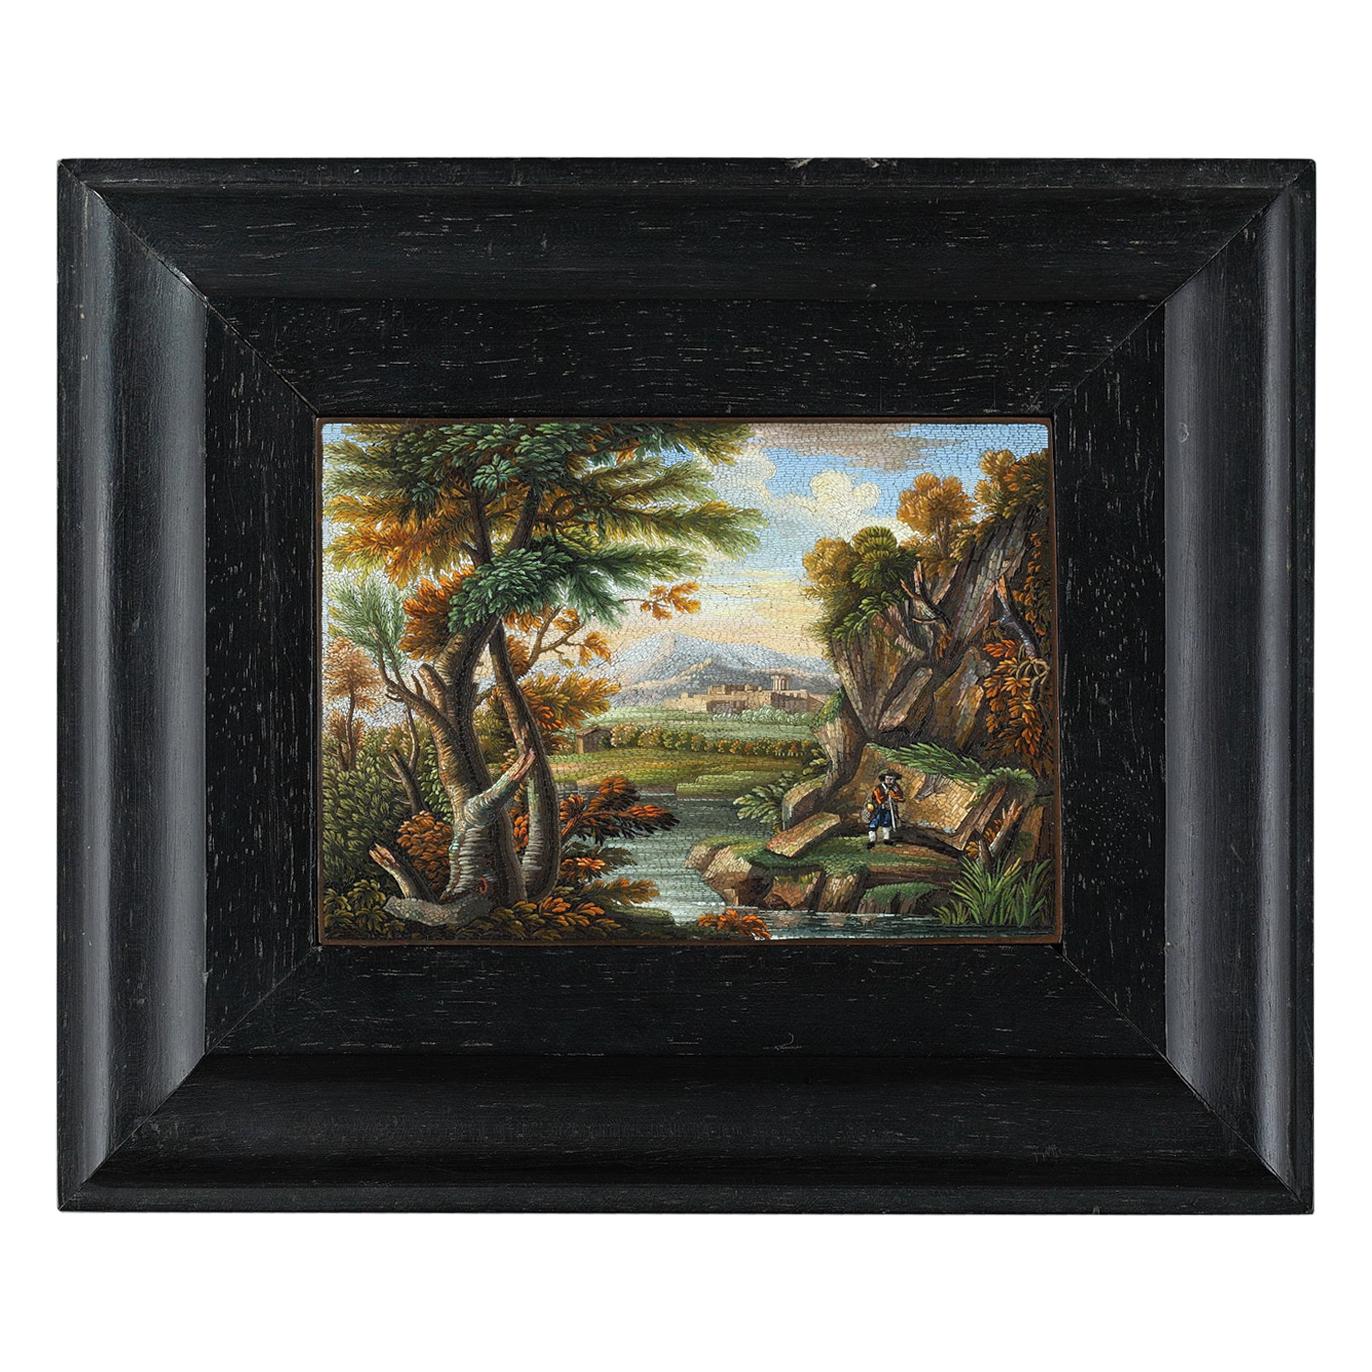 Micromosaic Plaque with River Landscape, circa 1820